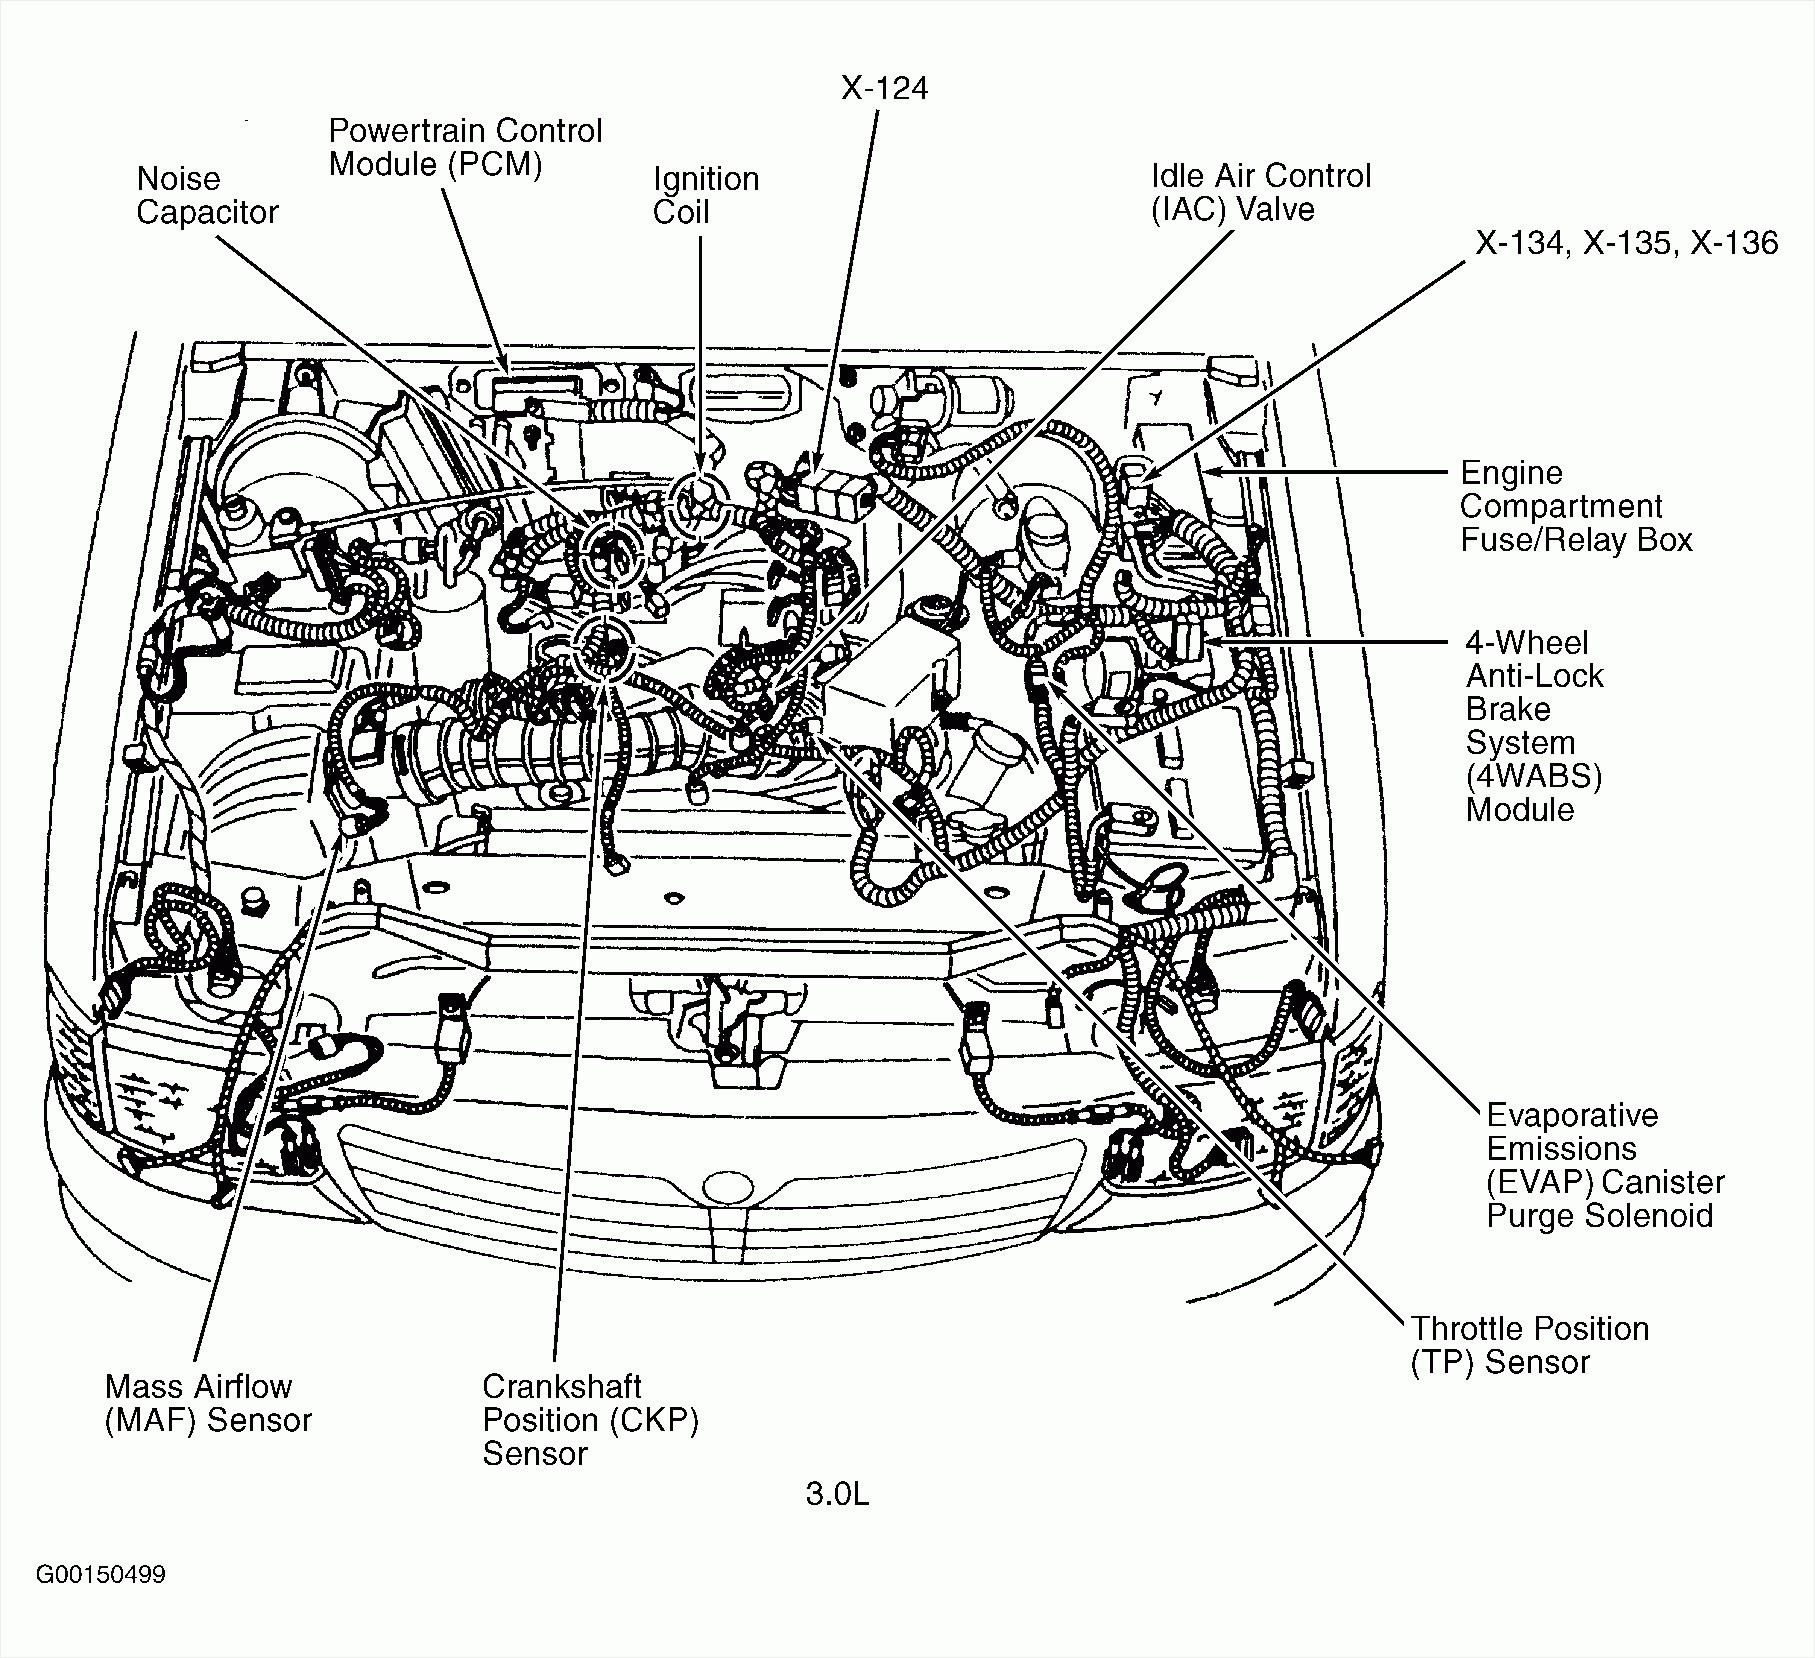 1998 Honda Accord V6 Engine Diagram Nissan 3 0 Engine Diagram Wiring Diagram Mega Of 1998 Honda Accord V6 Engine Diagram